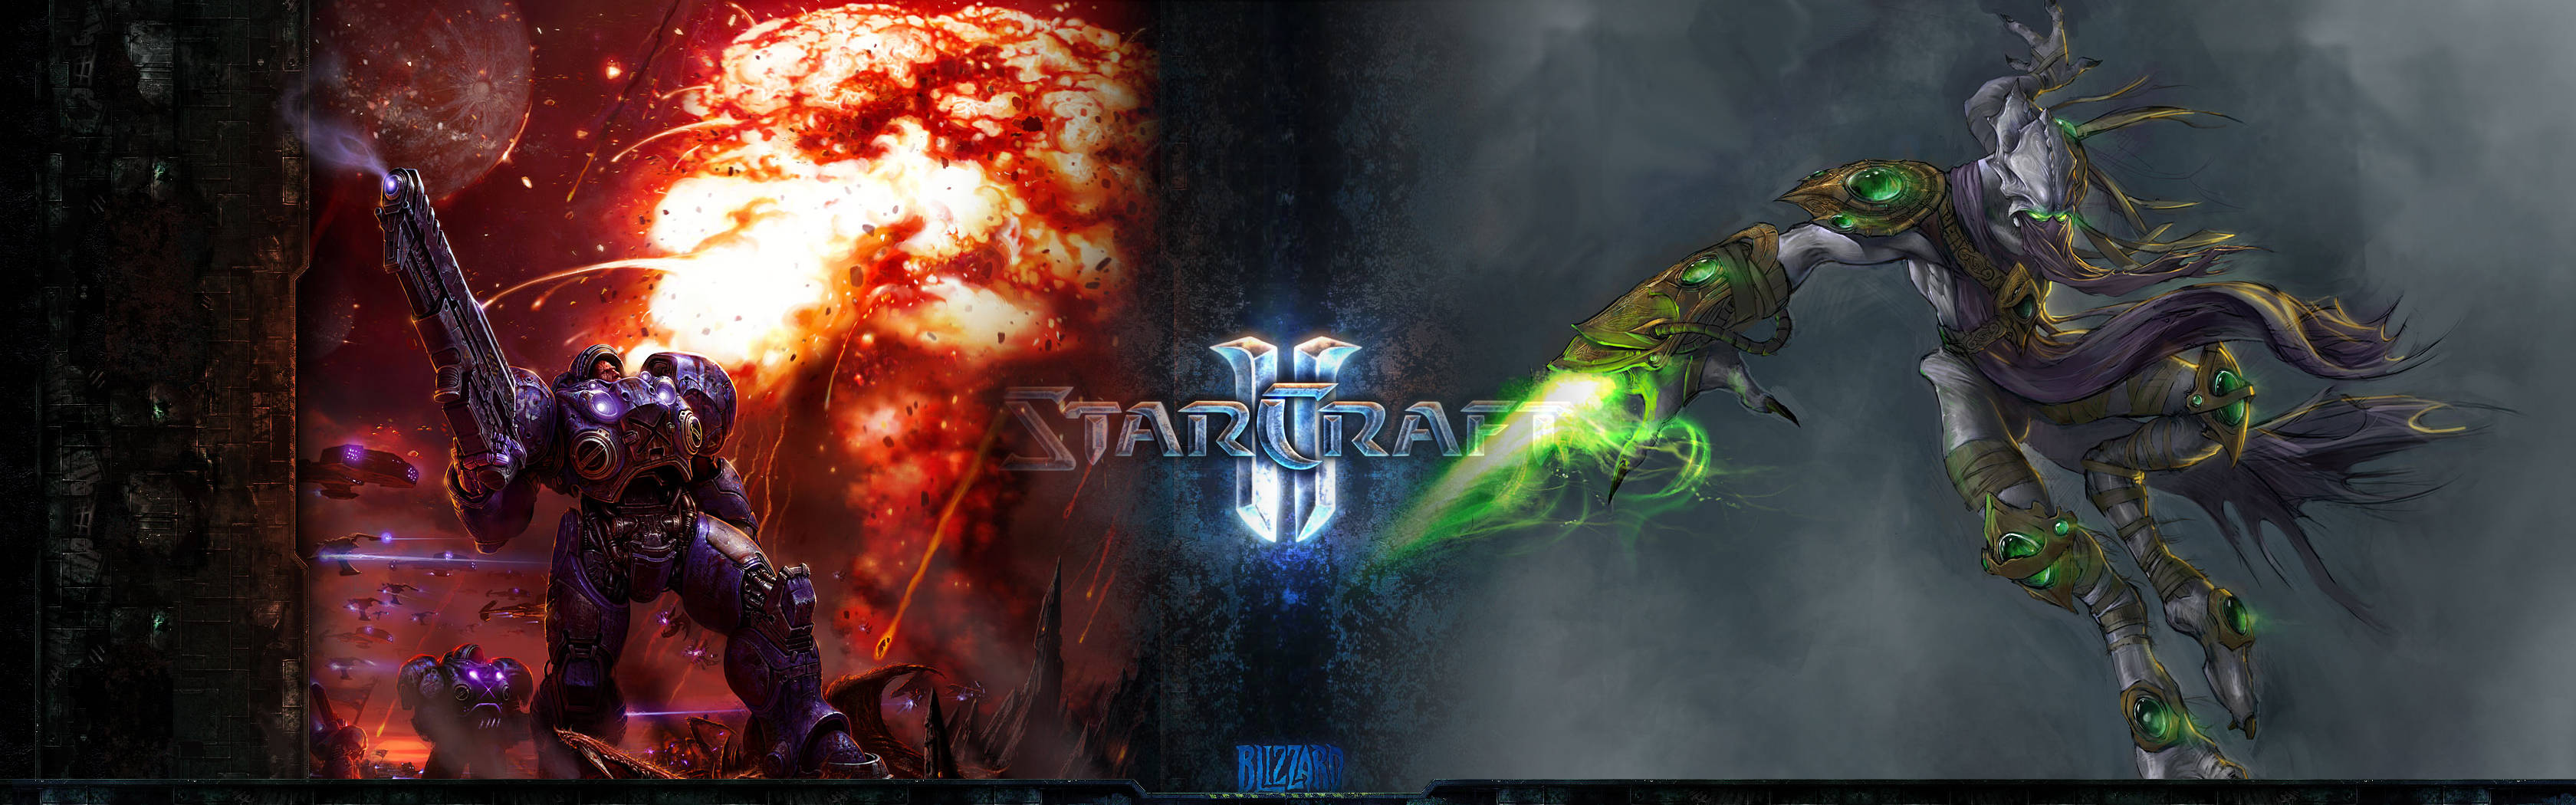 Starcraft 2 Main Characters Wallpaper